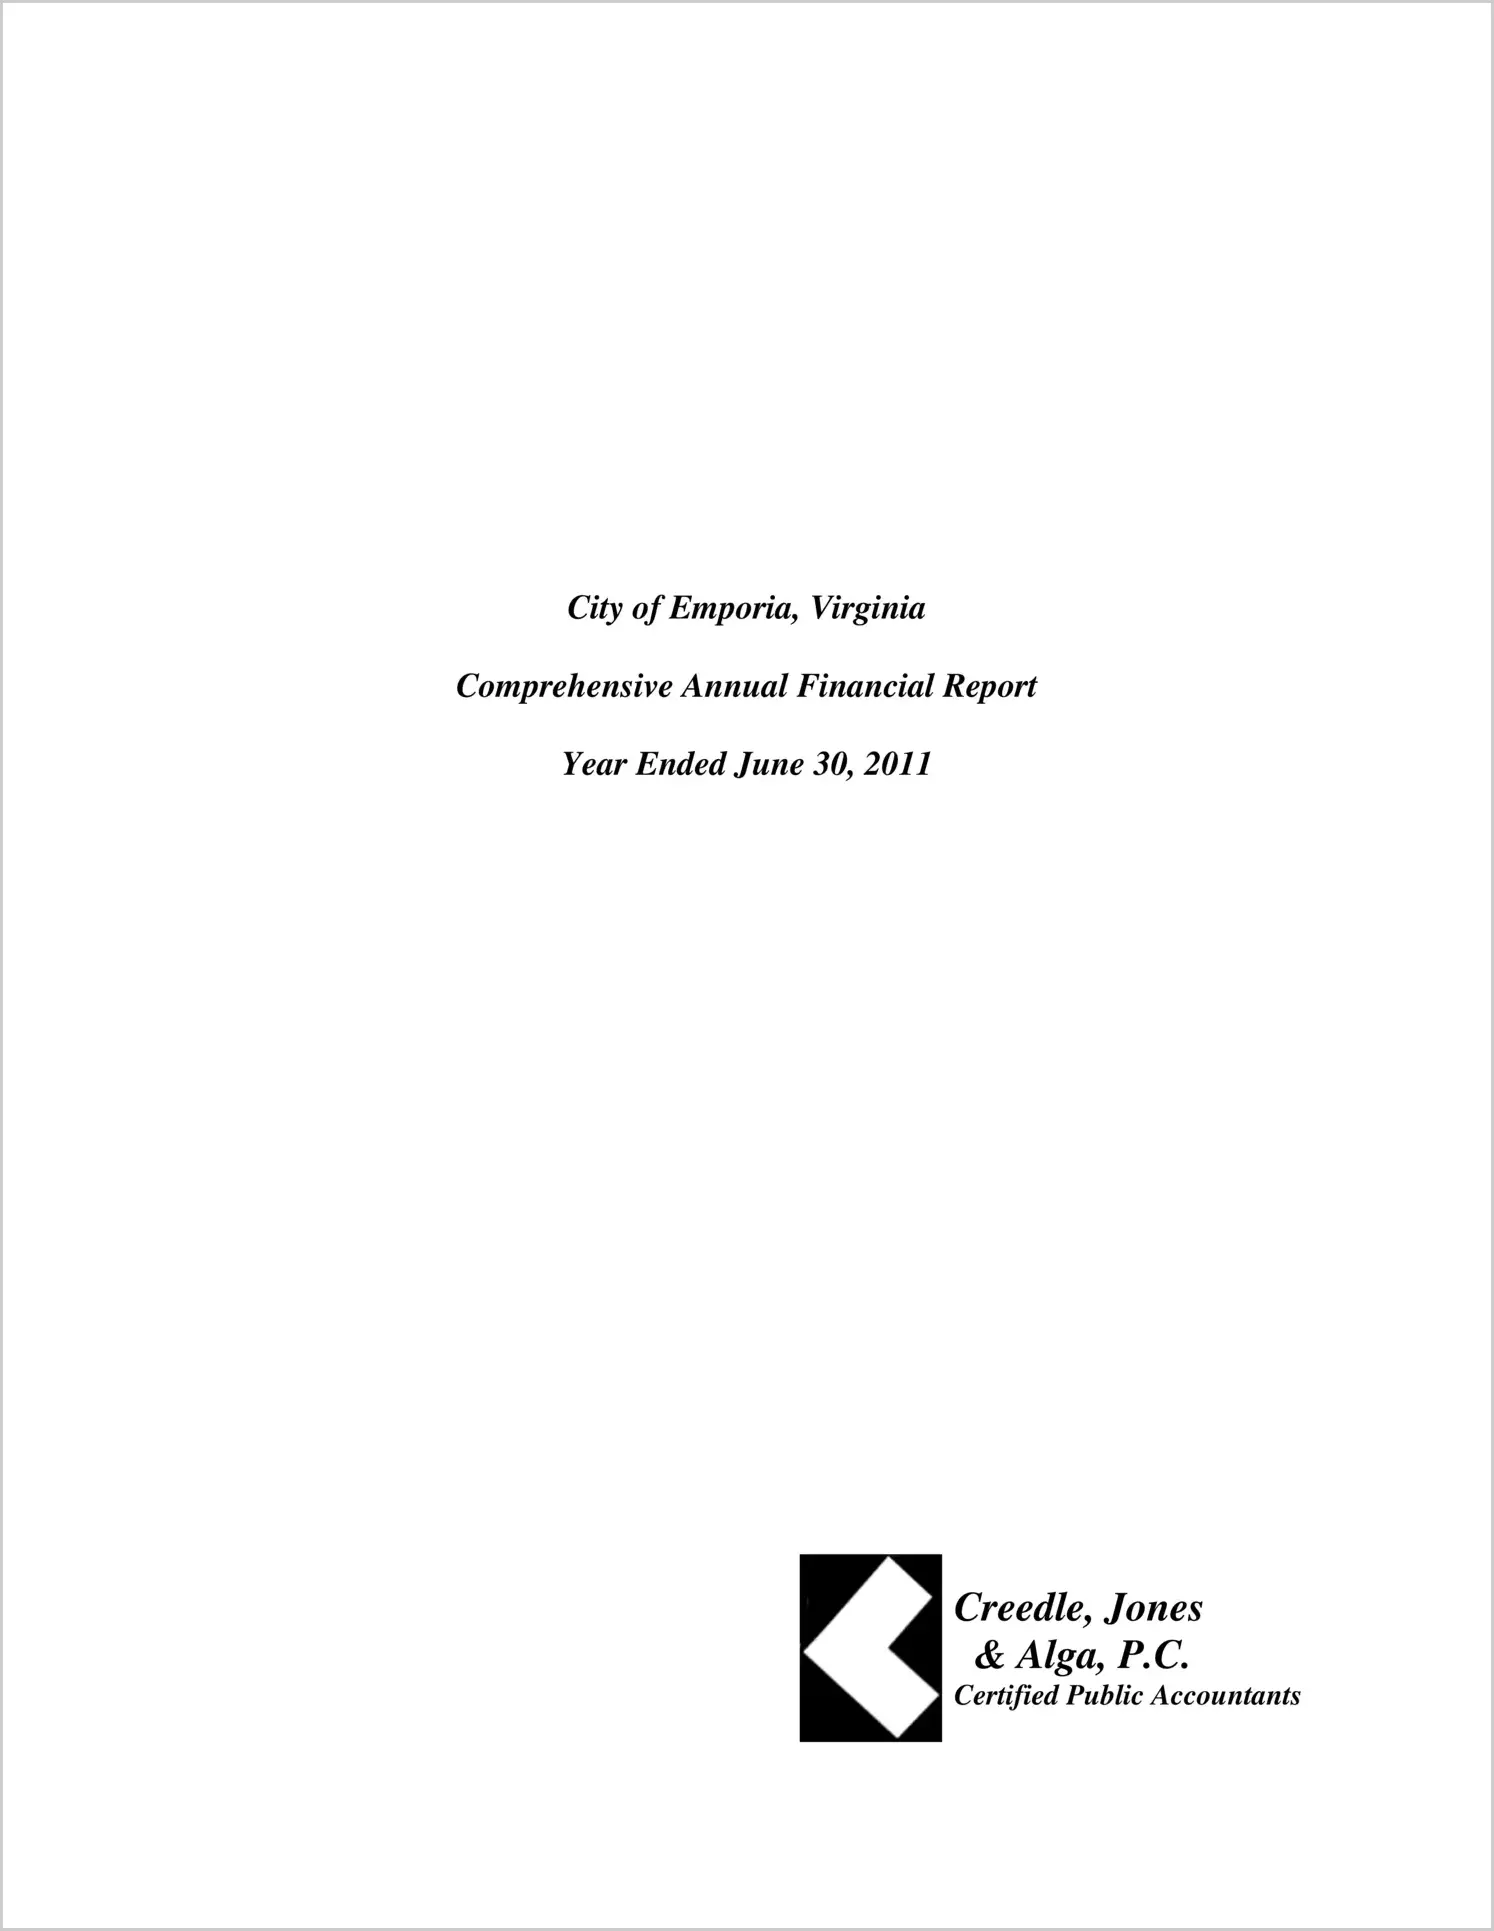 2011 Annual Financial Report for City of Emporia